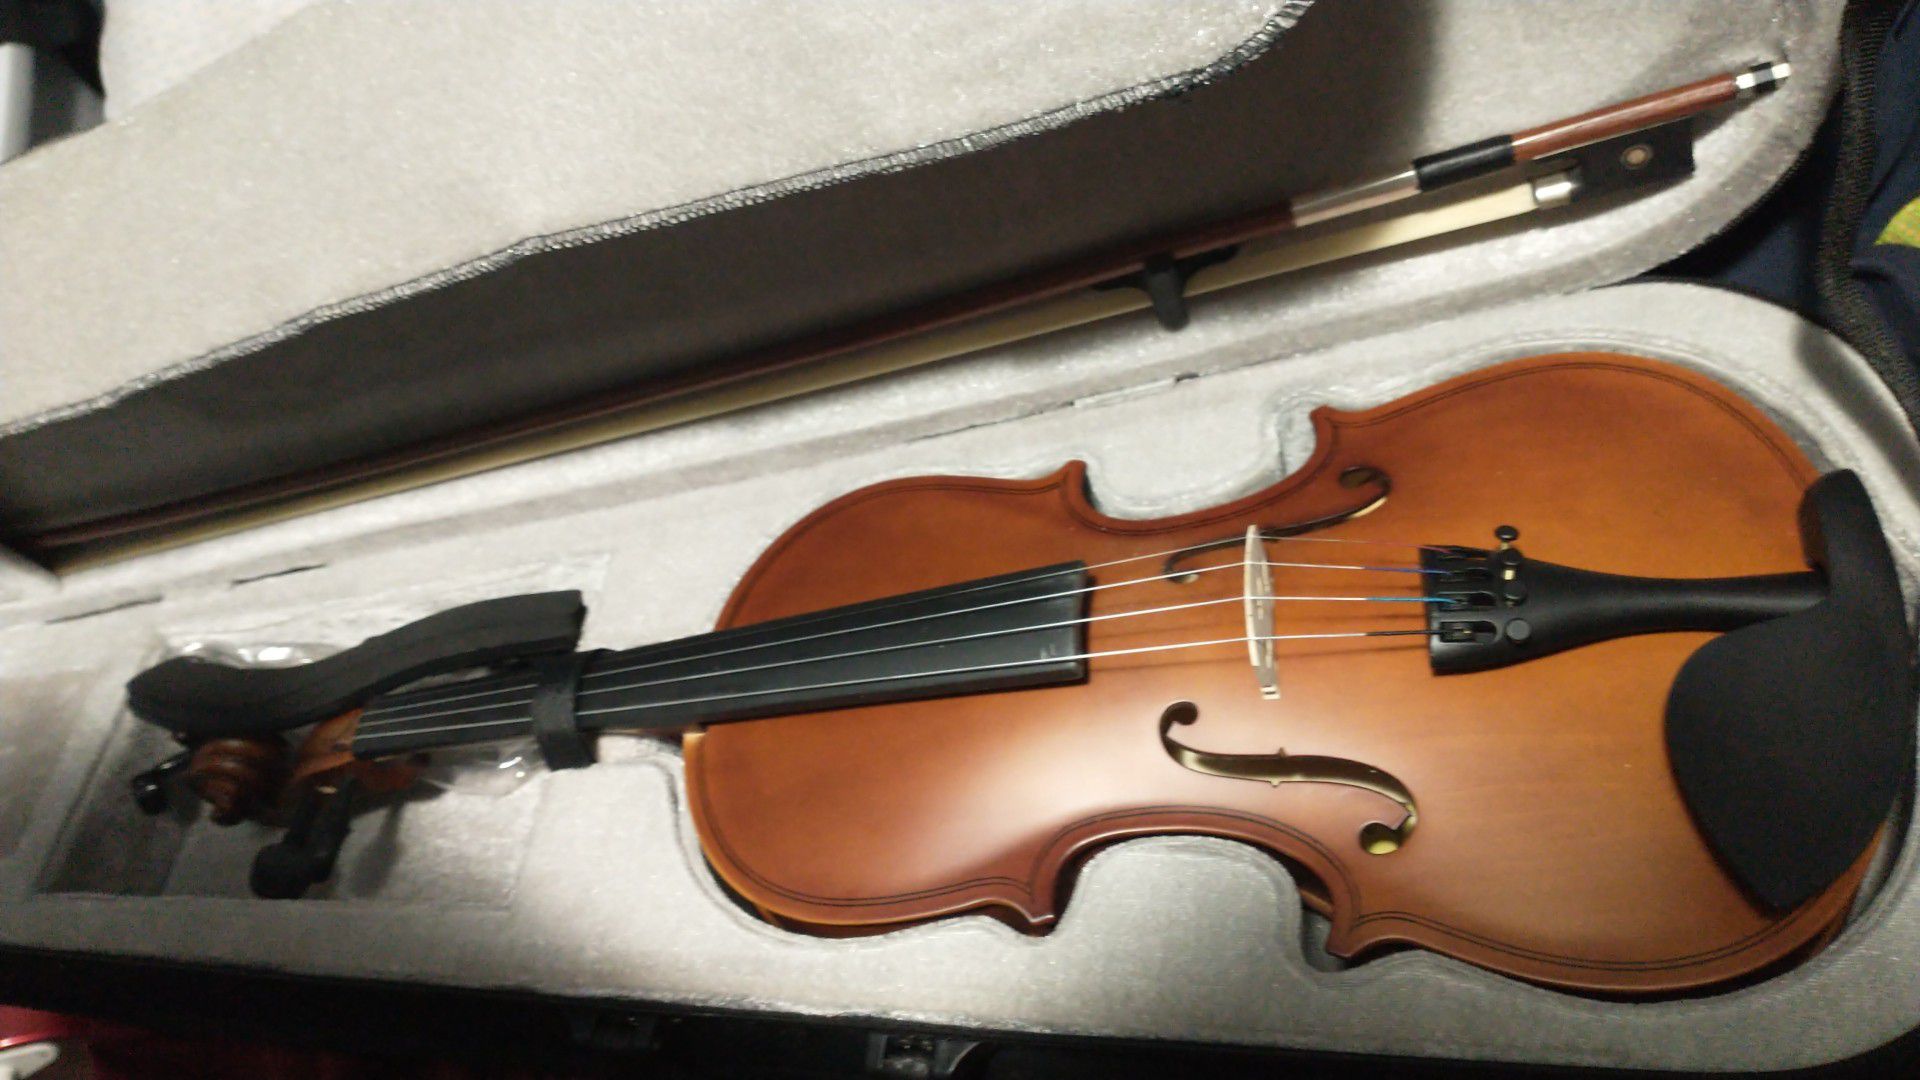 Paititi 4/4 full size beginner level violin